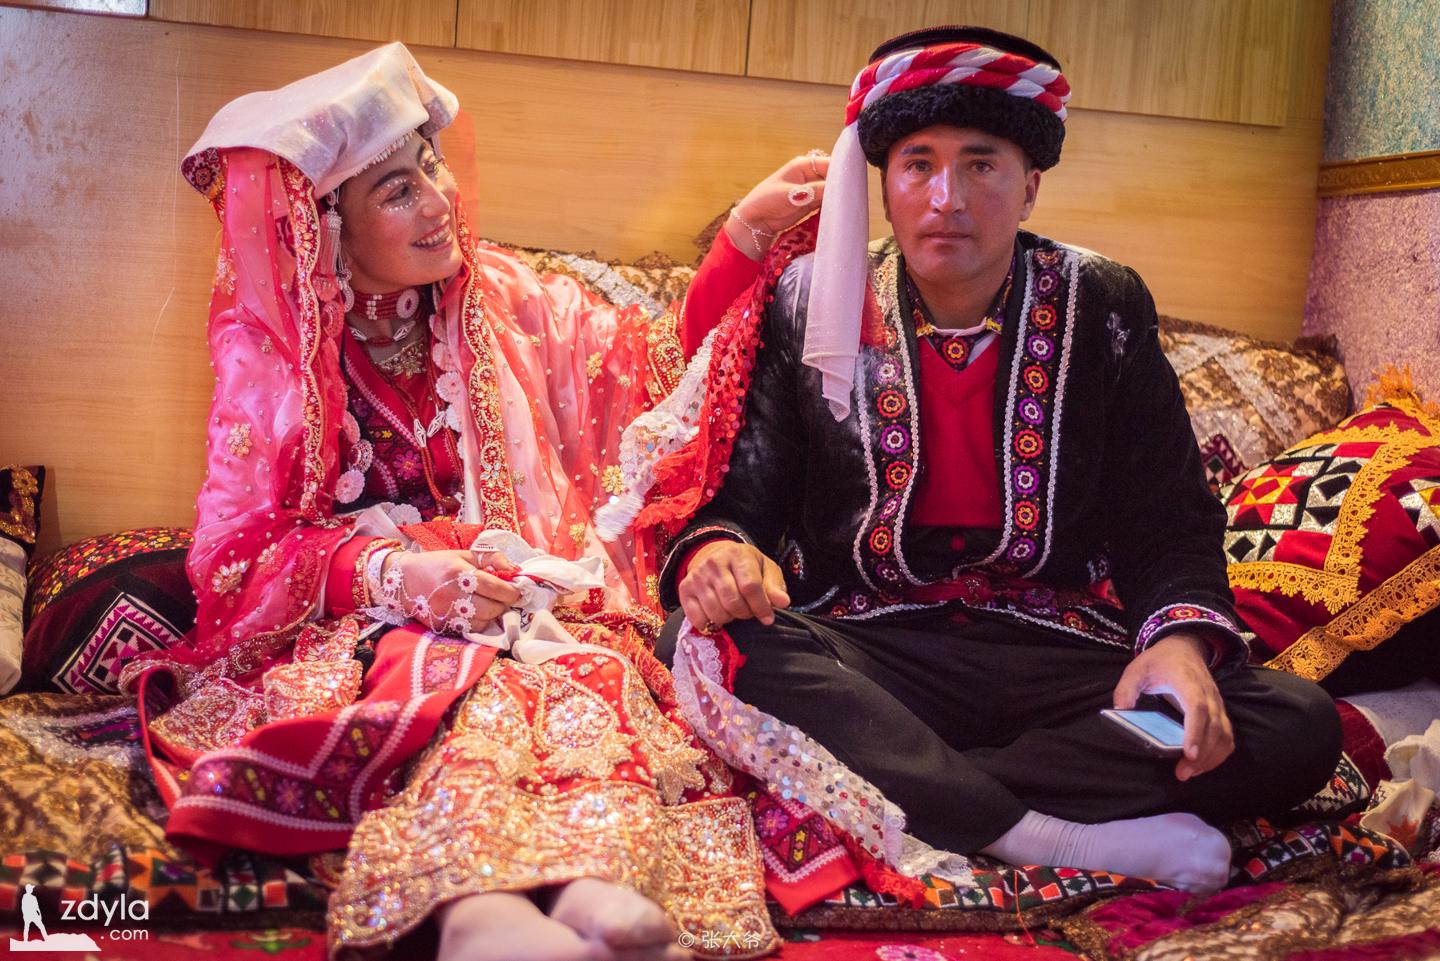 Tajik wedding - Pick up the bride